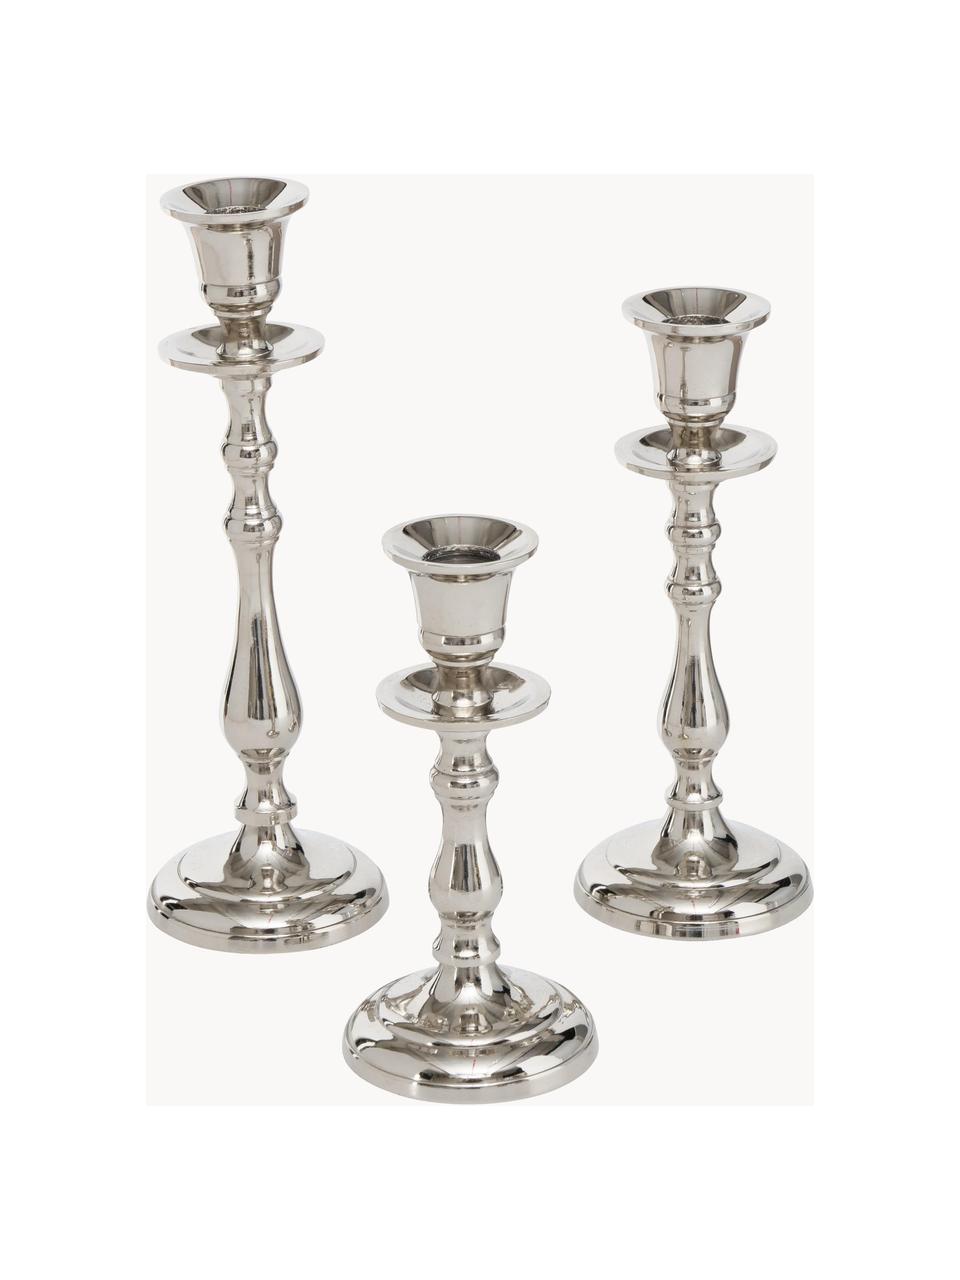 Set 3 candelabri Vicco, Alluminio, Argentato, Set in varie misure